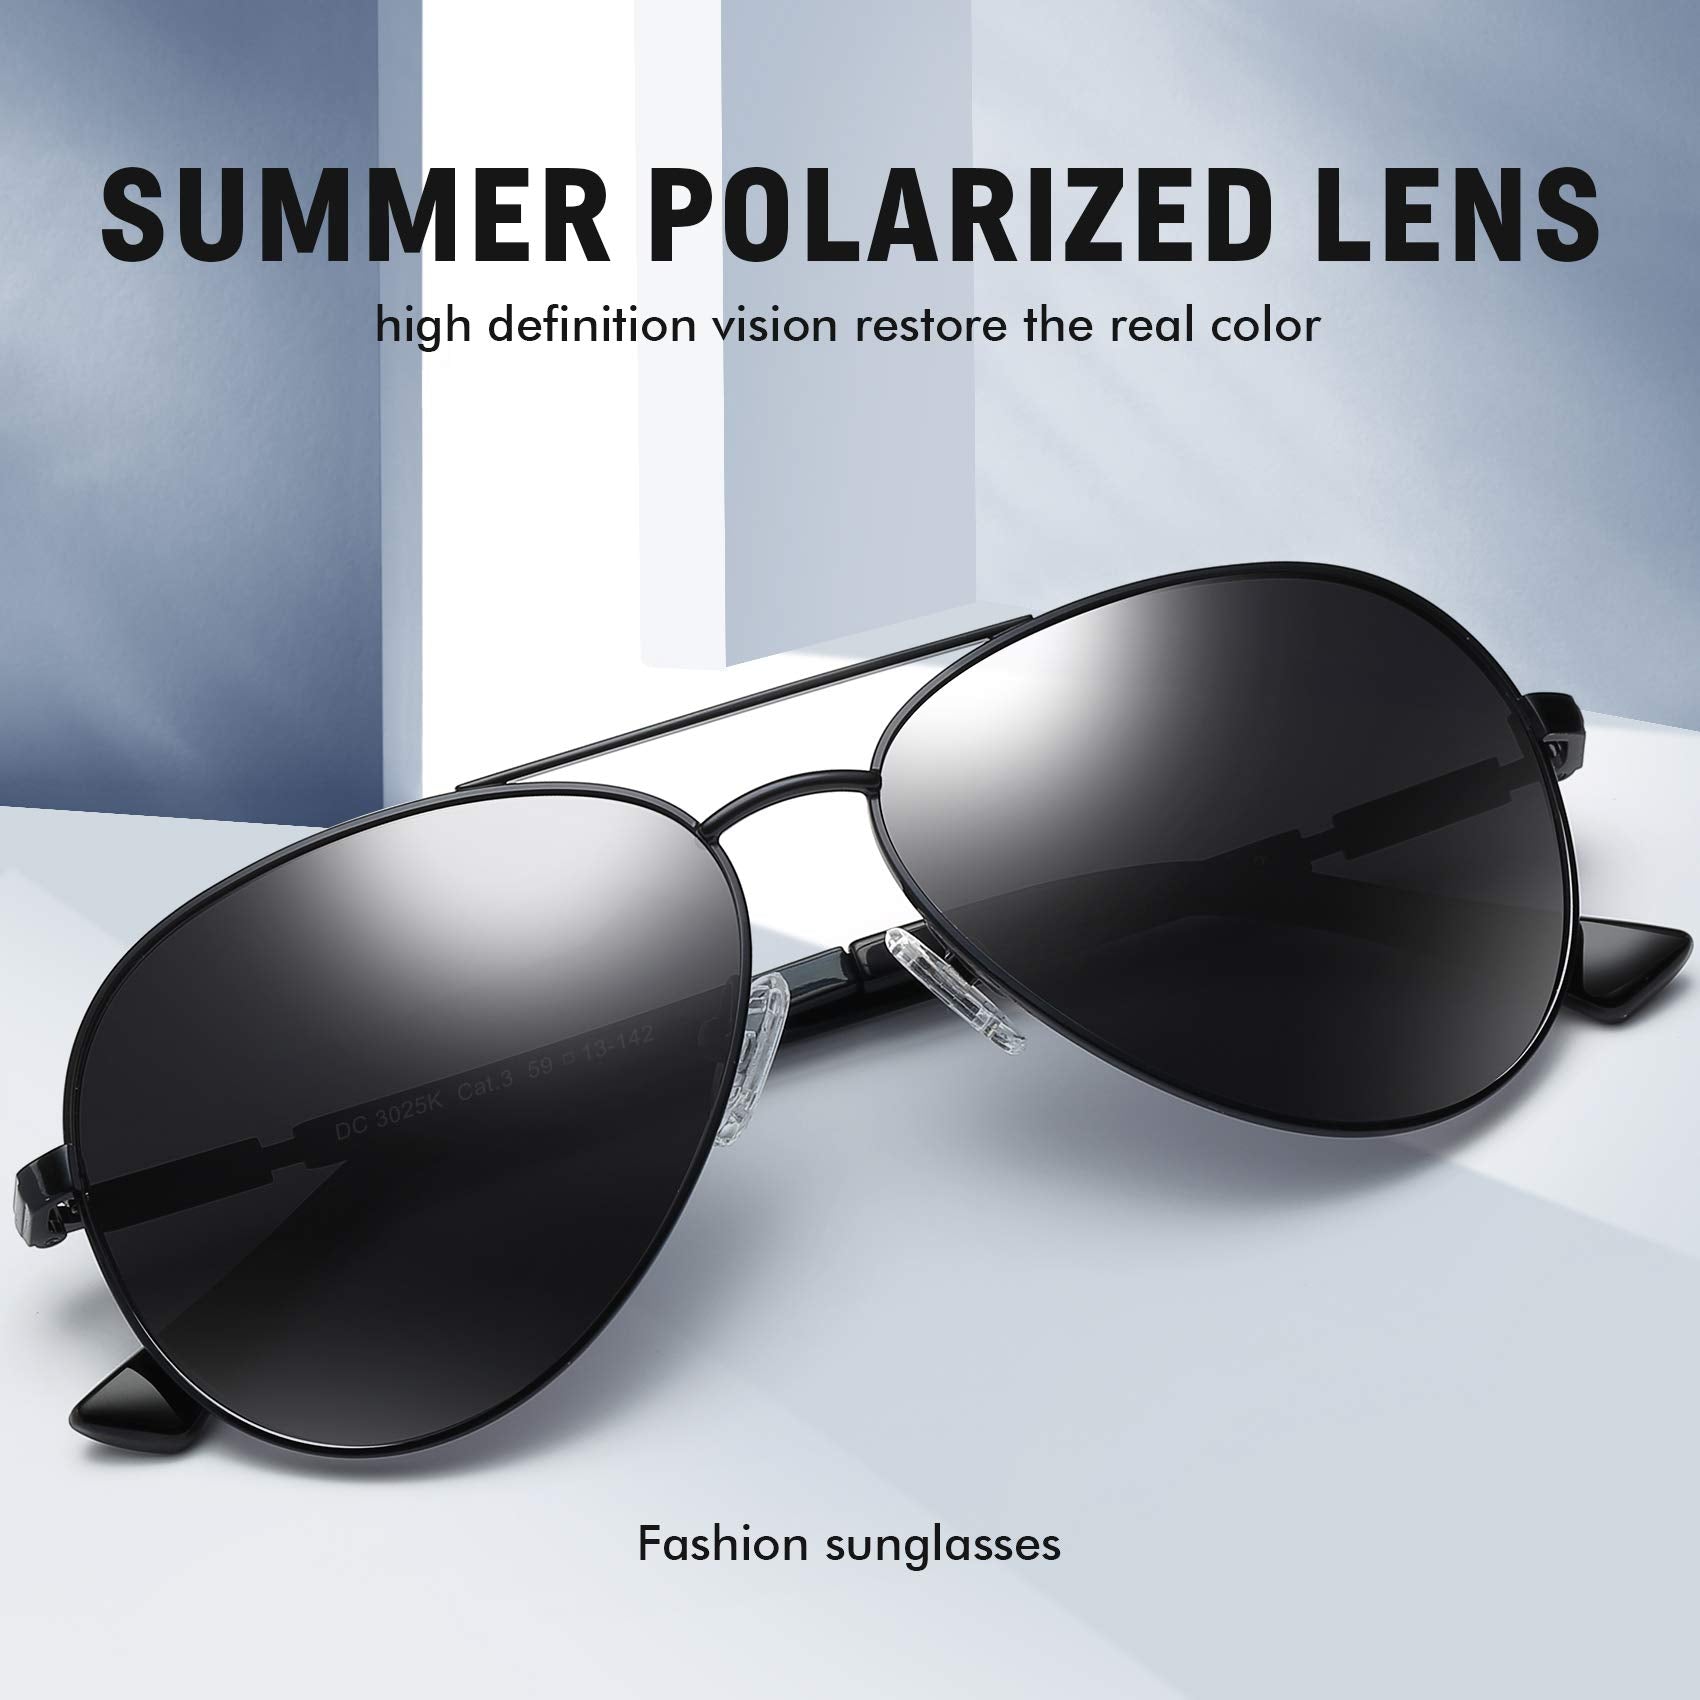 DUCO Aviator Style Polarized Sunglasses for Men and Women 3025K